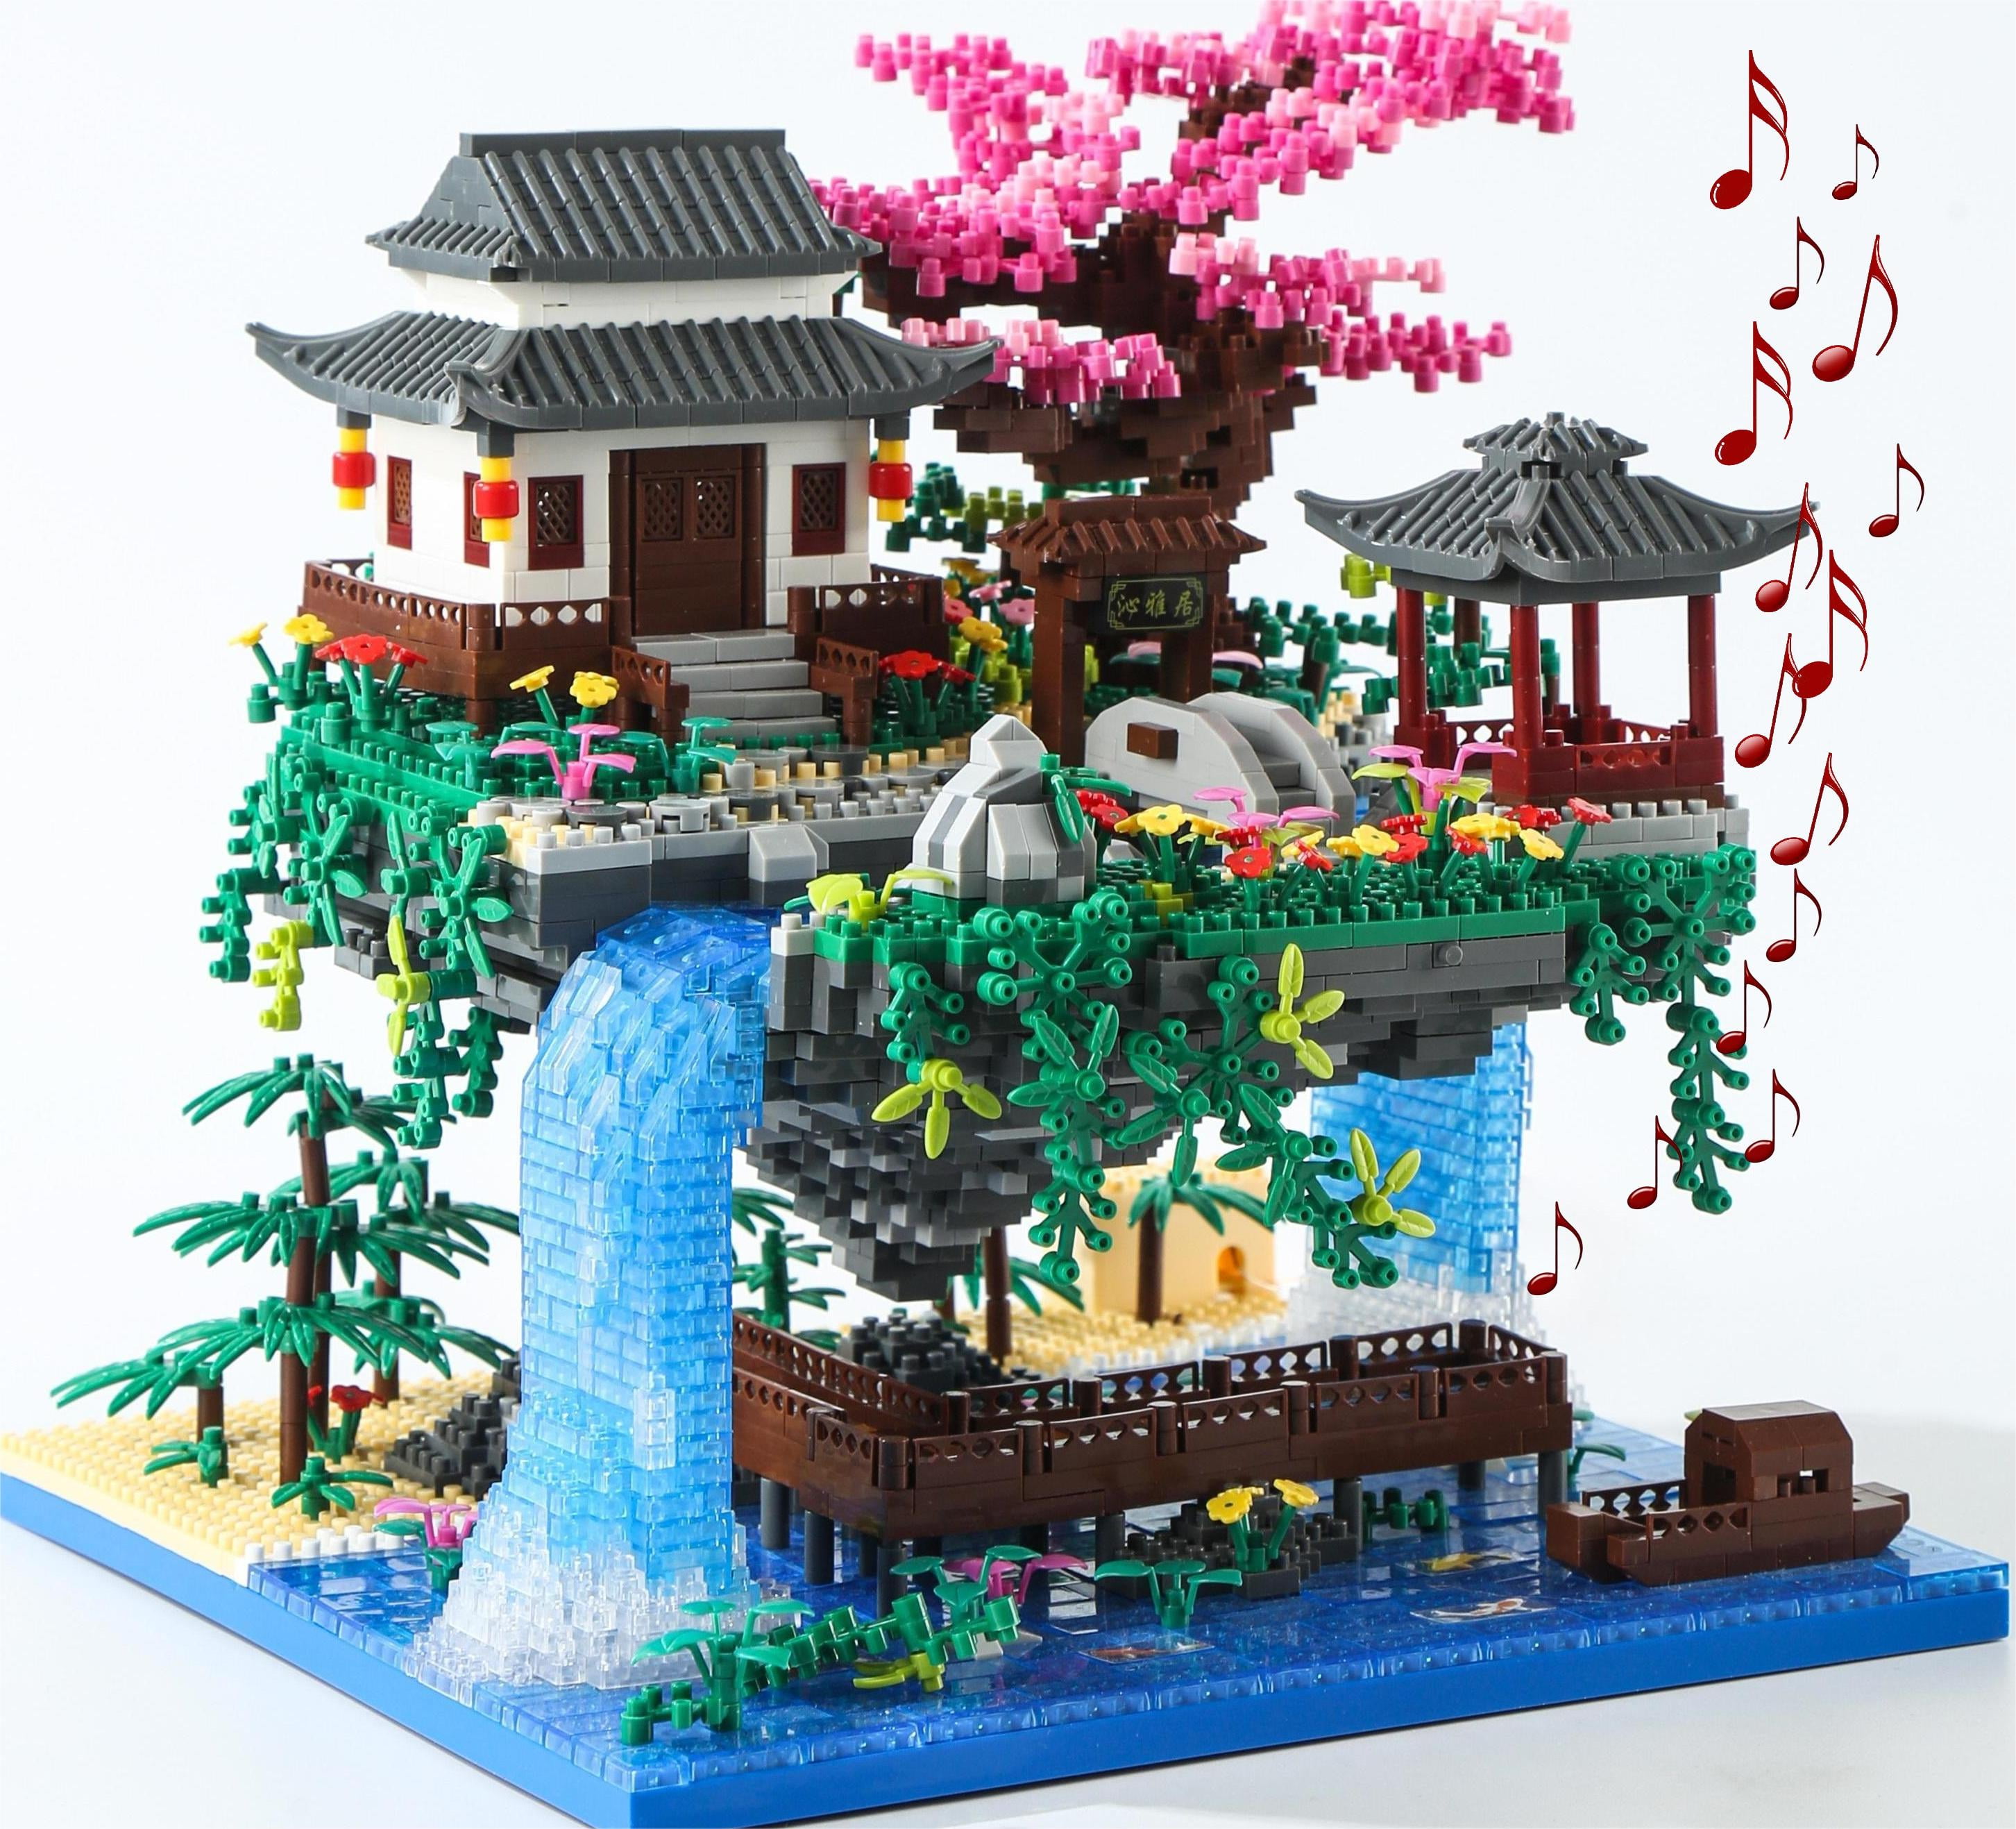 Yushinv Cherry Blossom Tree Building Set 3220 Pcs, Original Music ...